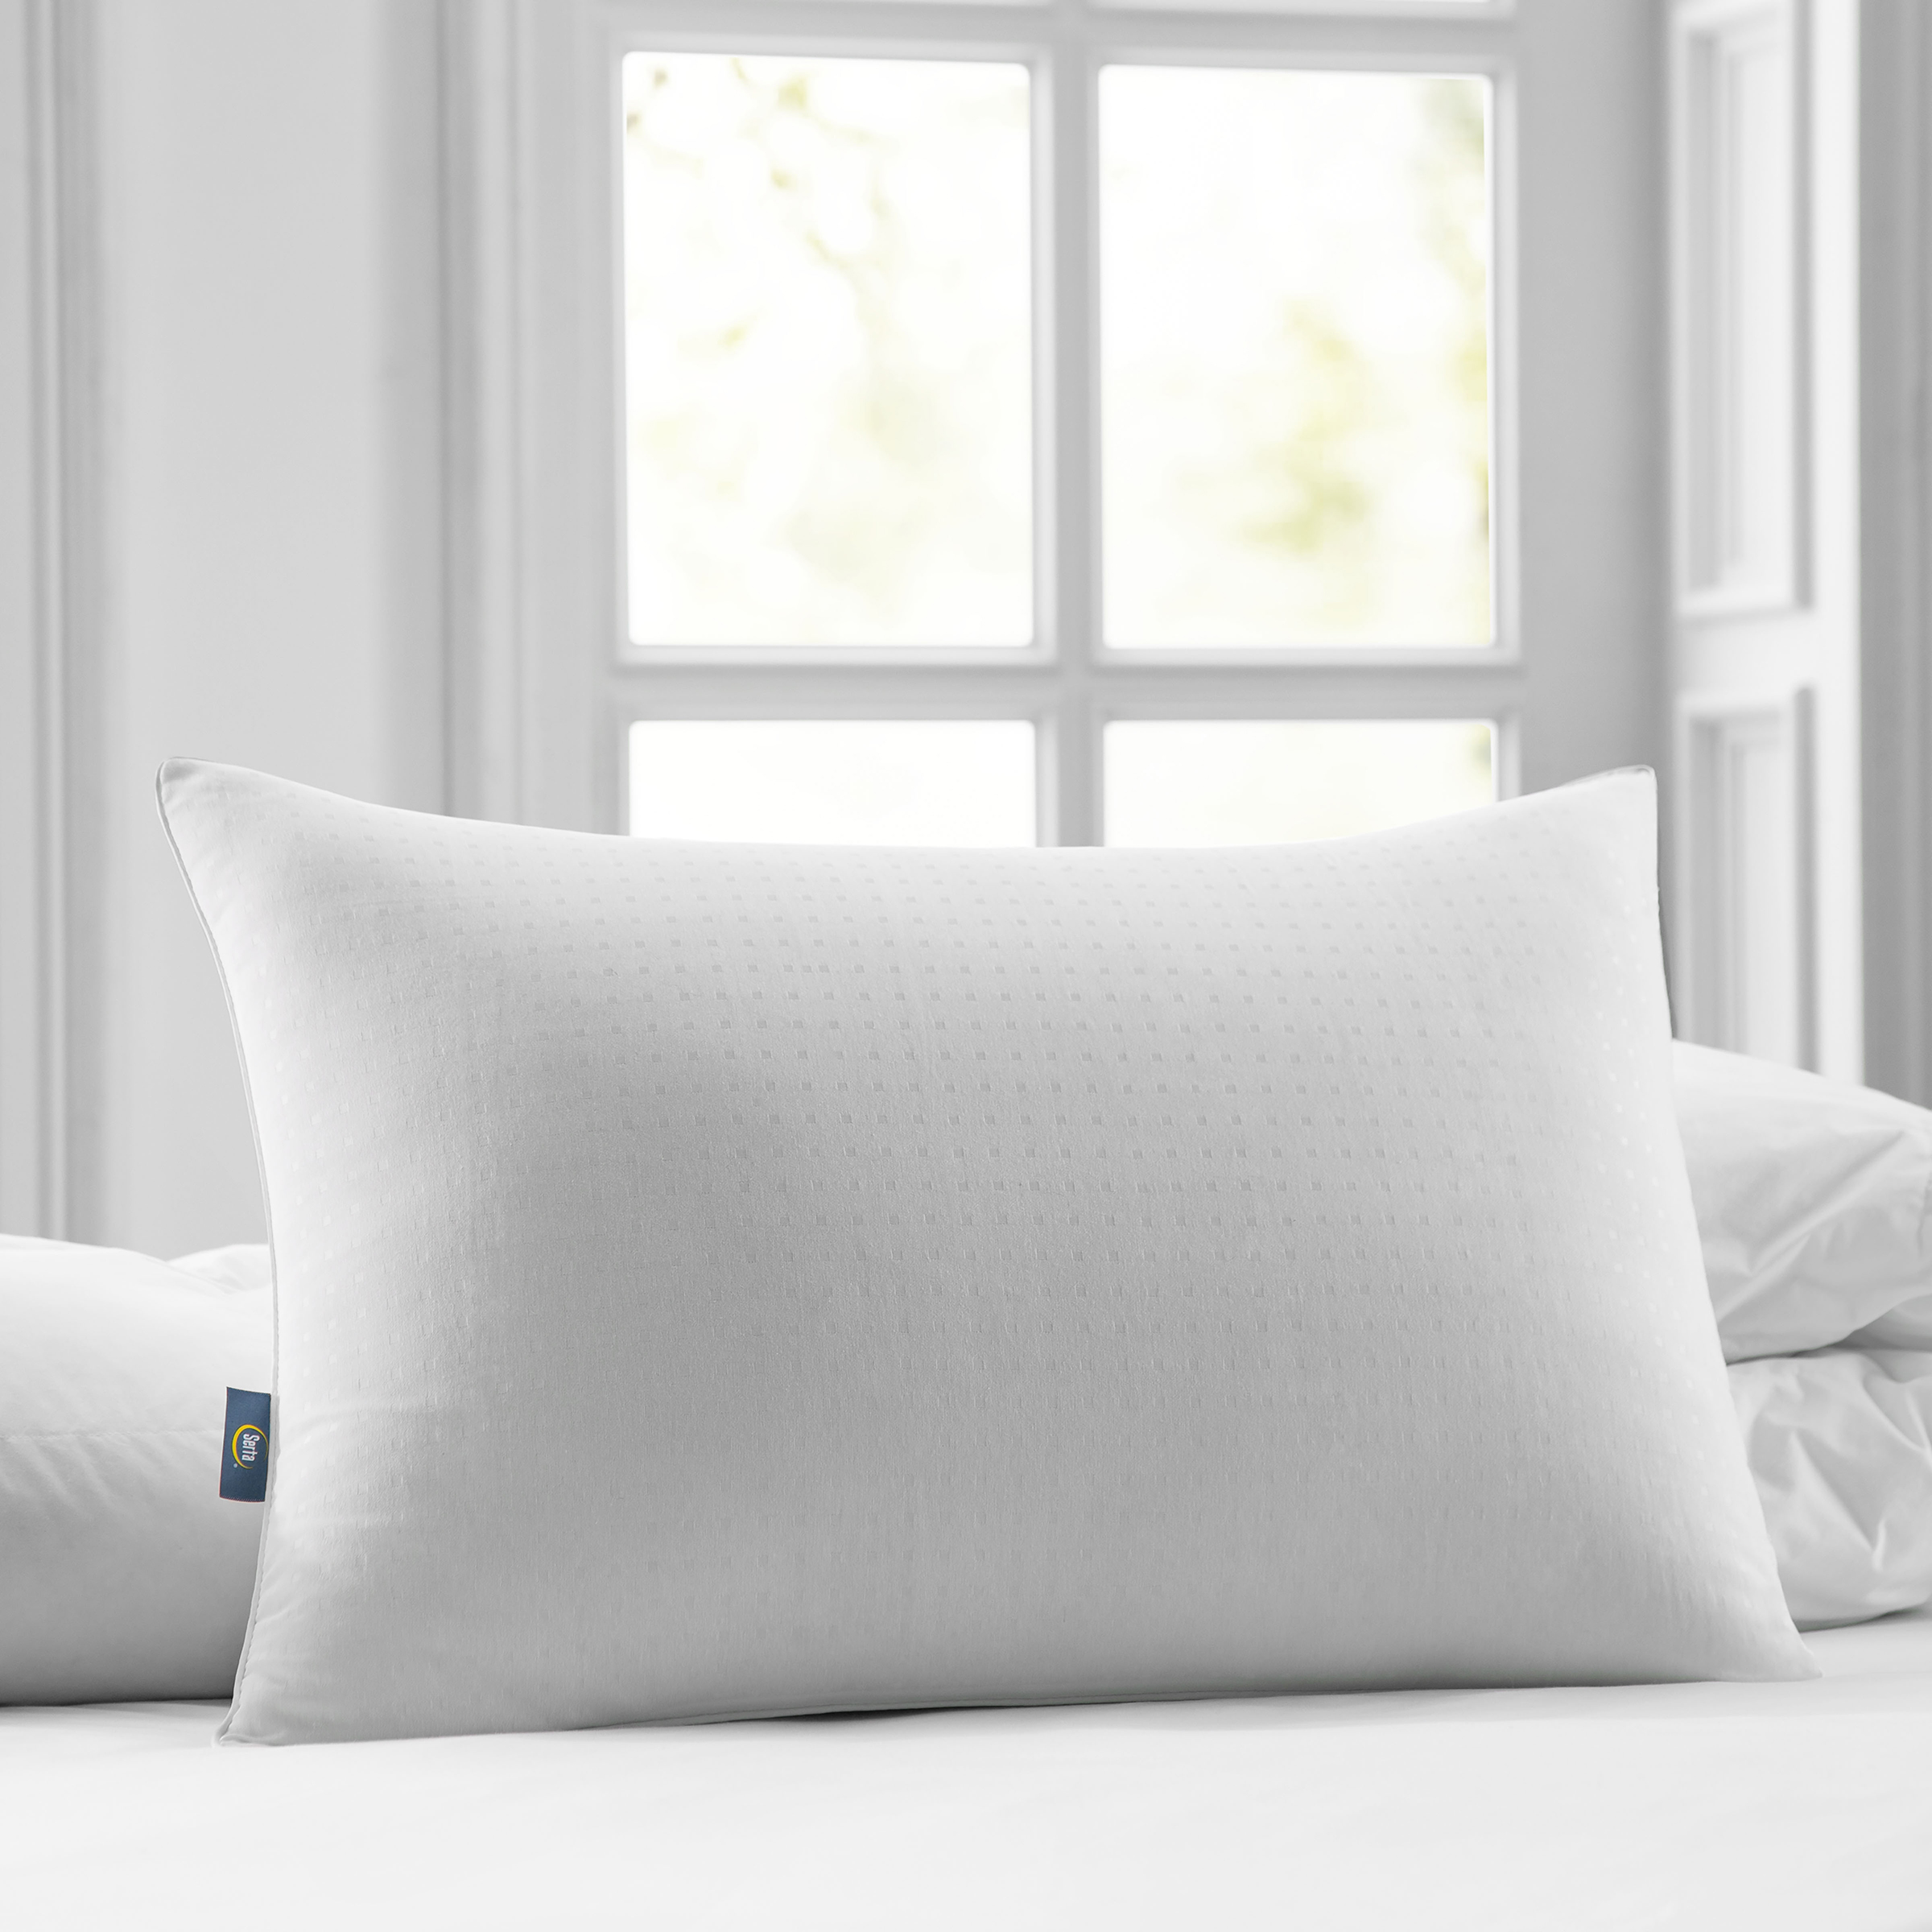 Sertapedic Won't Go Flat Bed Pillow, Standard/Queen - image 3 of 5